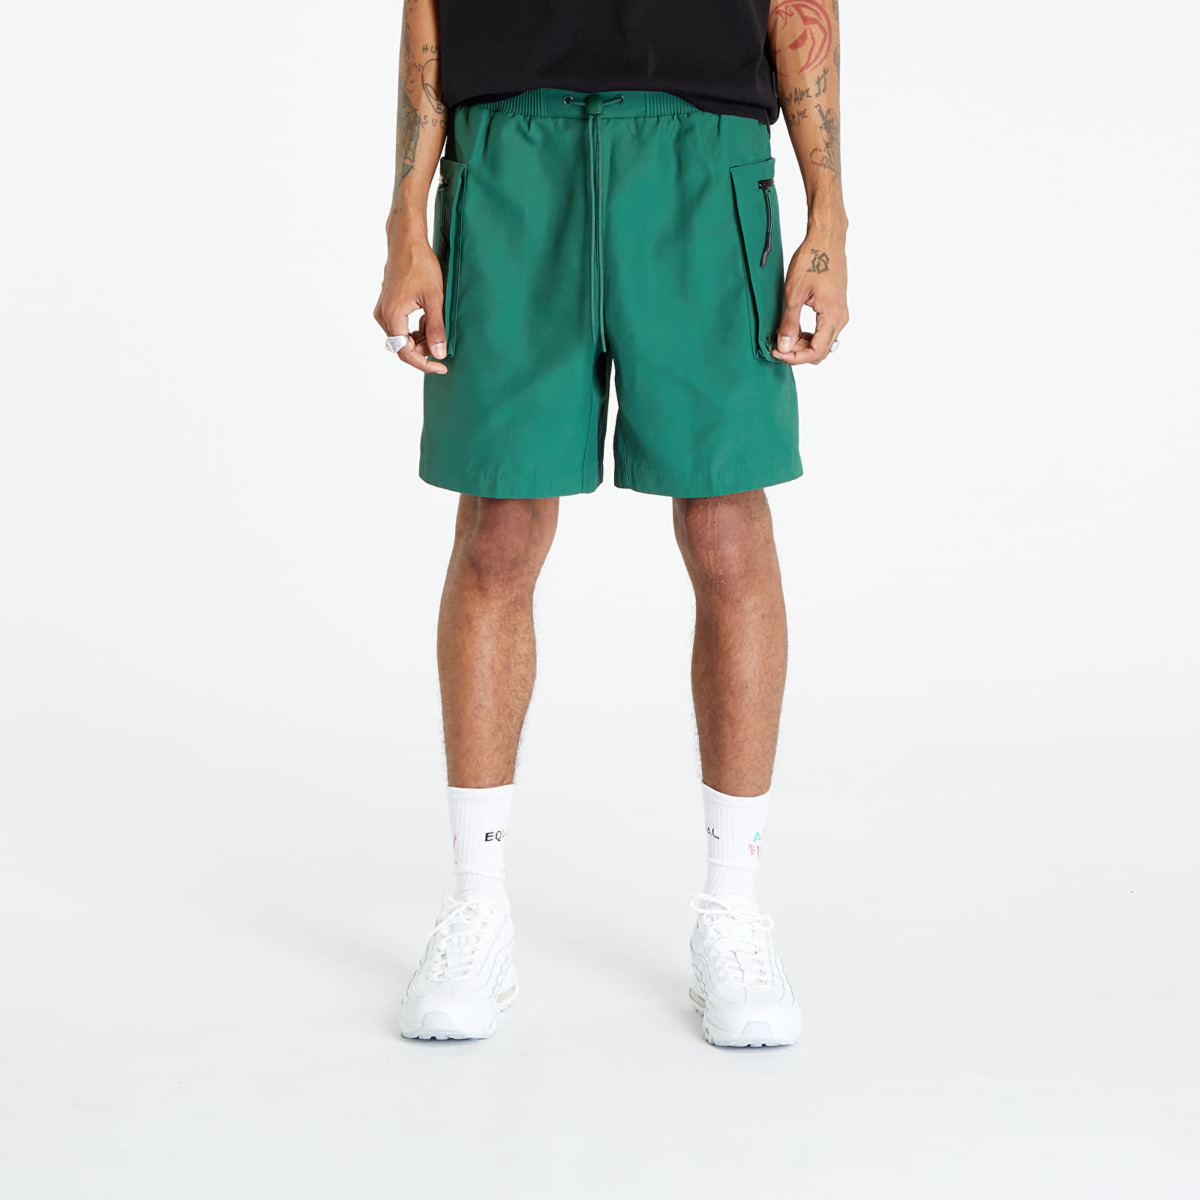 Footshop - Man Sportswear in Black - Nike GOOFASH